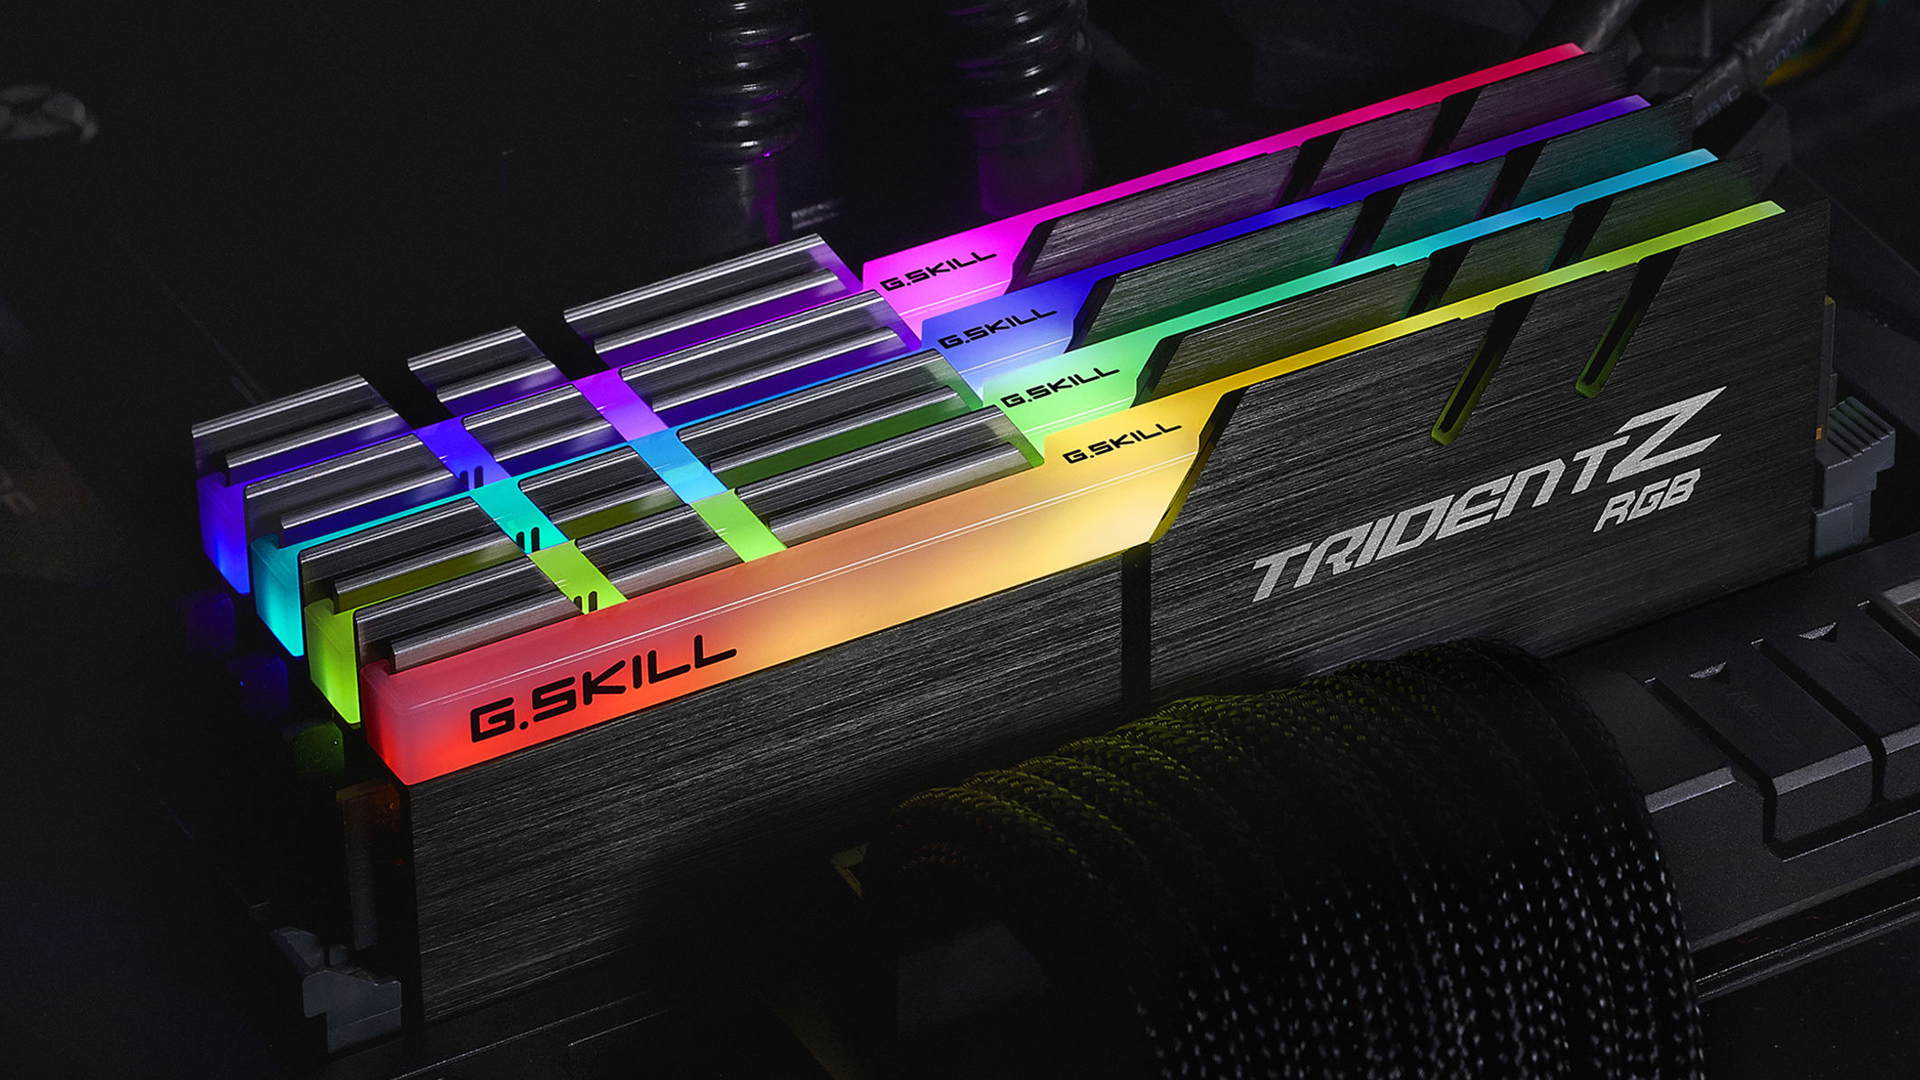 Cyber Monday RAM deals: G.Skill Tridentz RGB